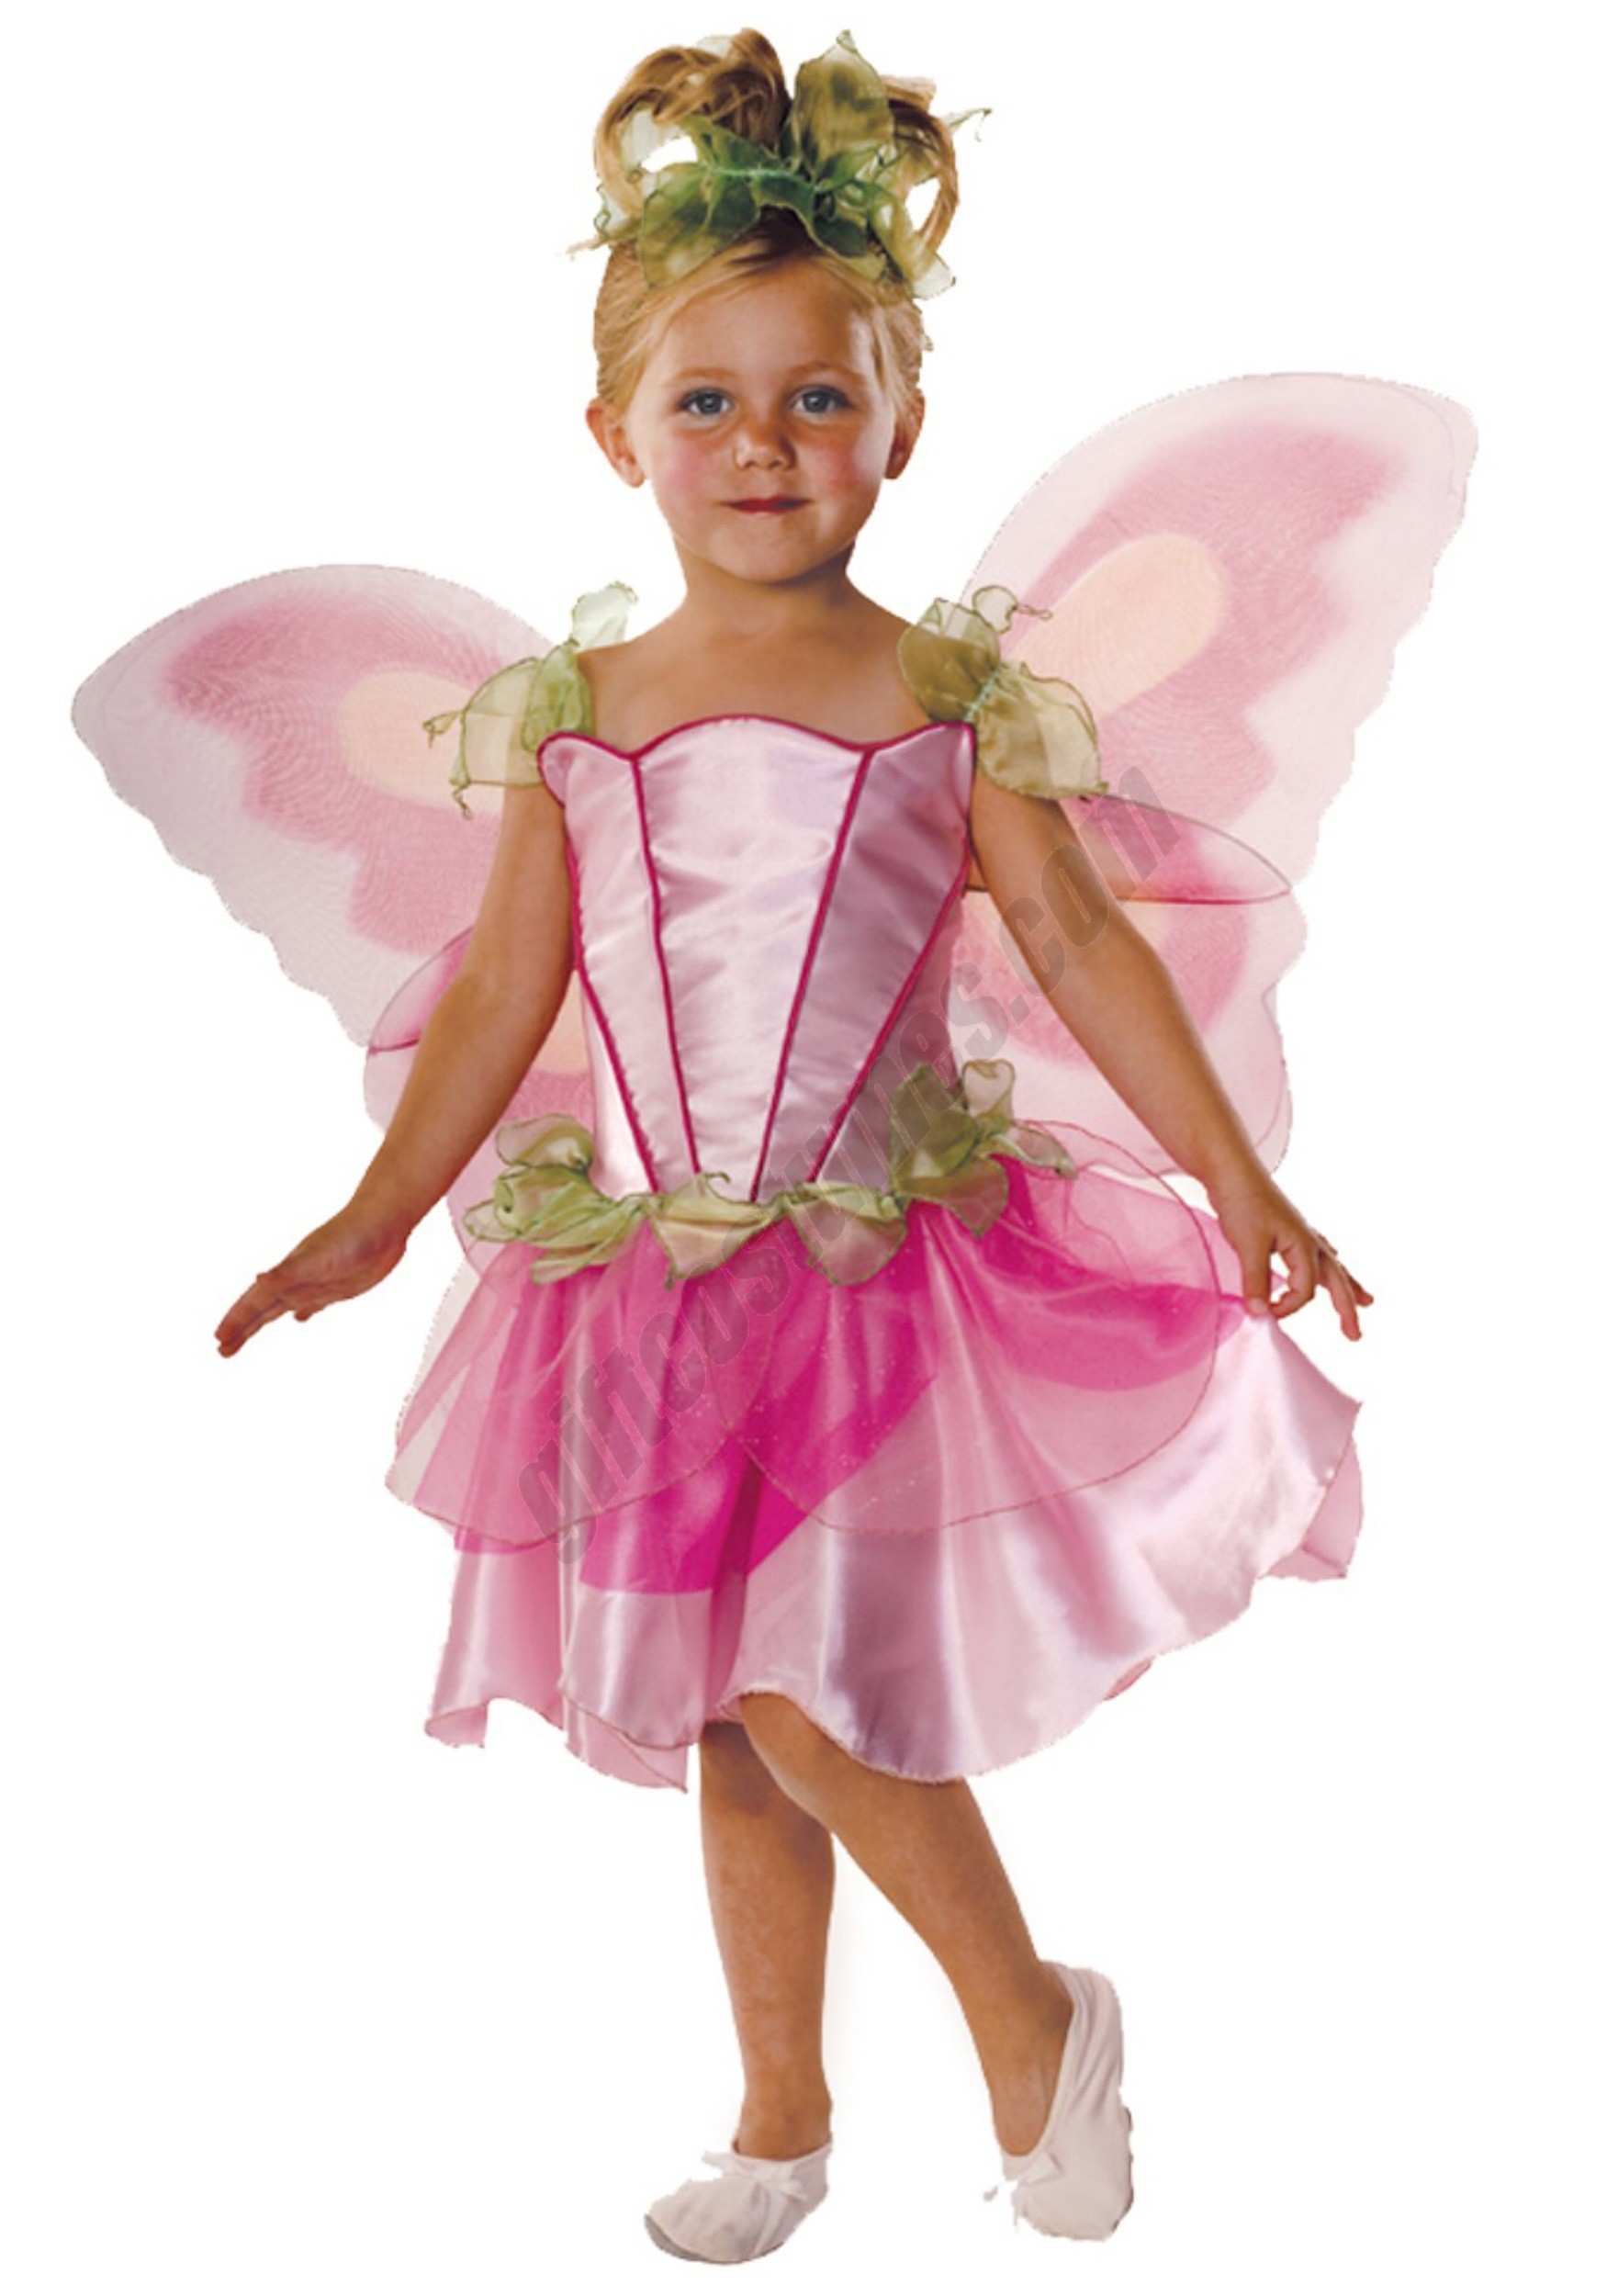 Child Springtime Fairy Costume Promotions - Child Springtime Fairy Costume Promotions